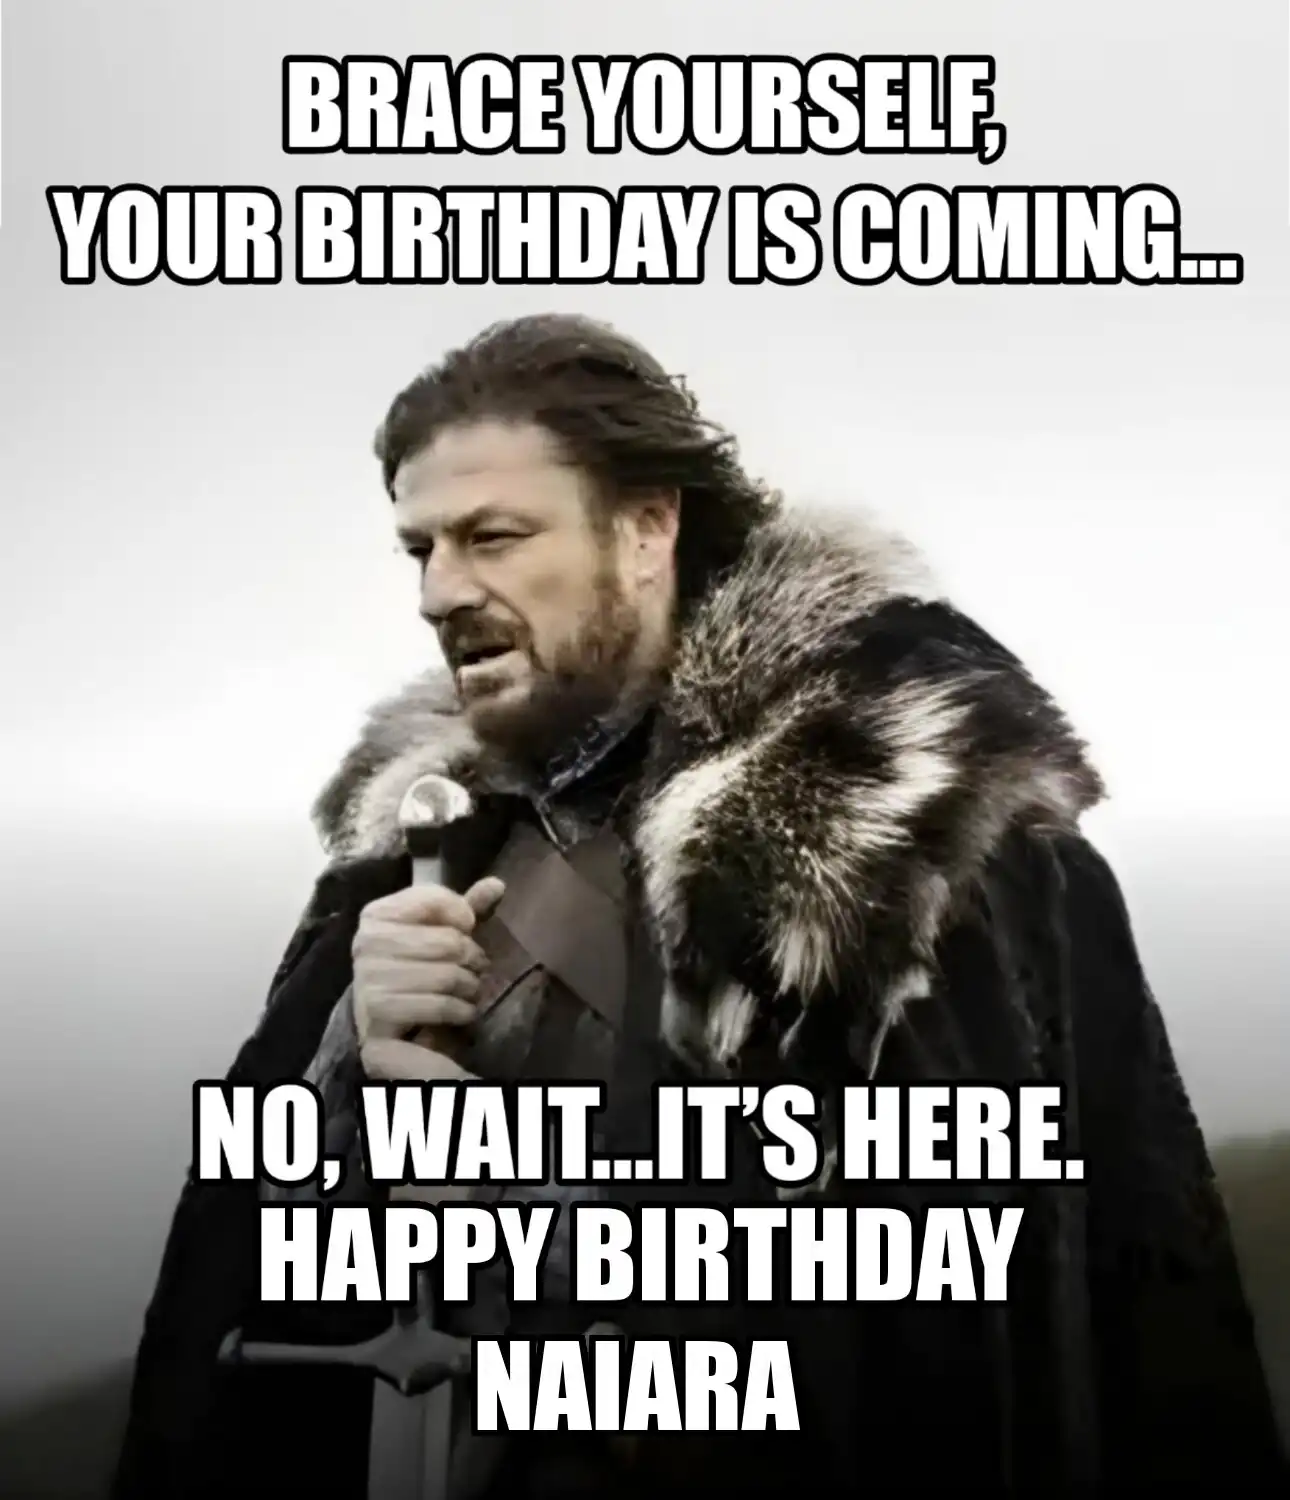 Happy Birthday Naiara Brace Yourself Your Birthday Is Coming Meme